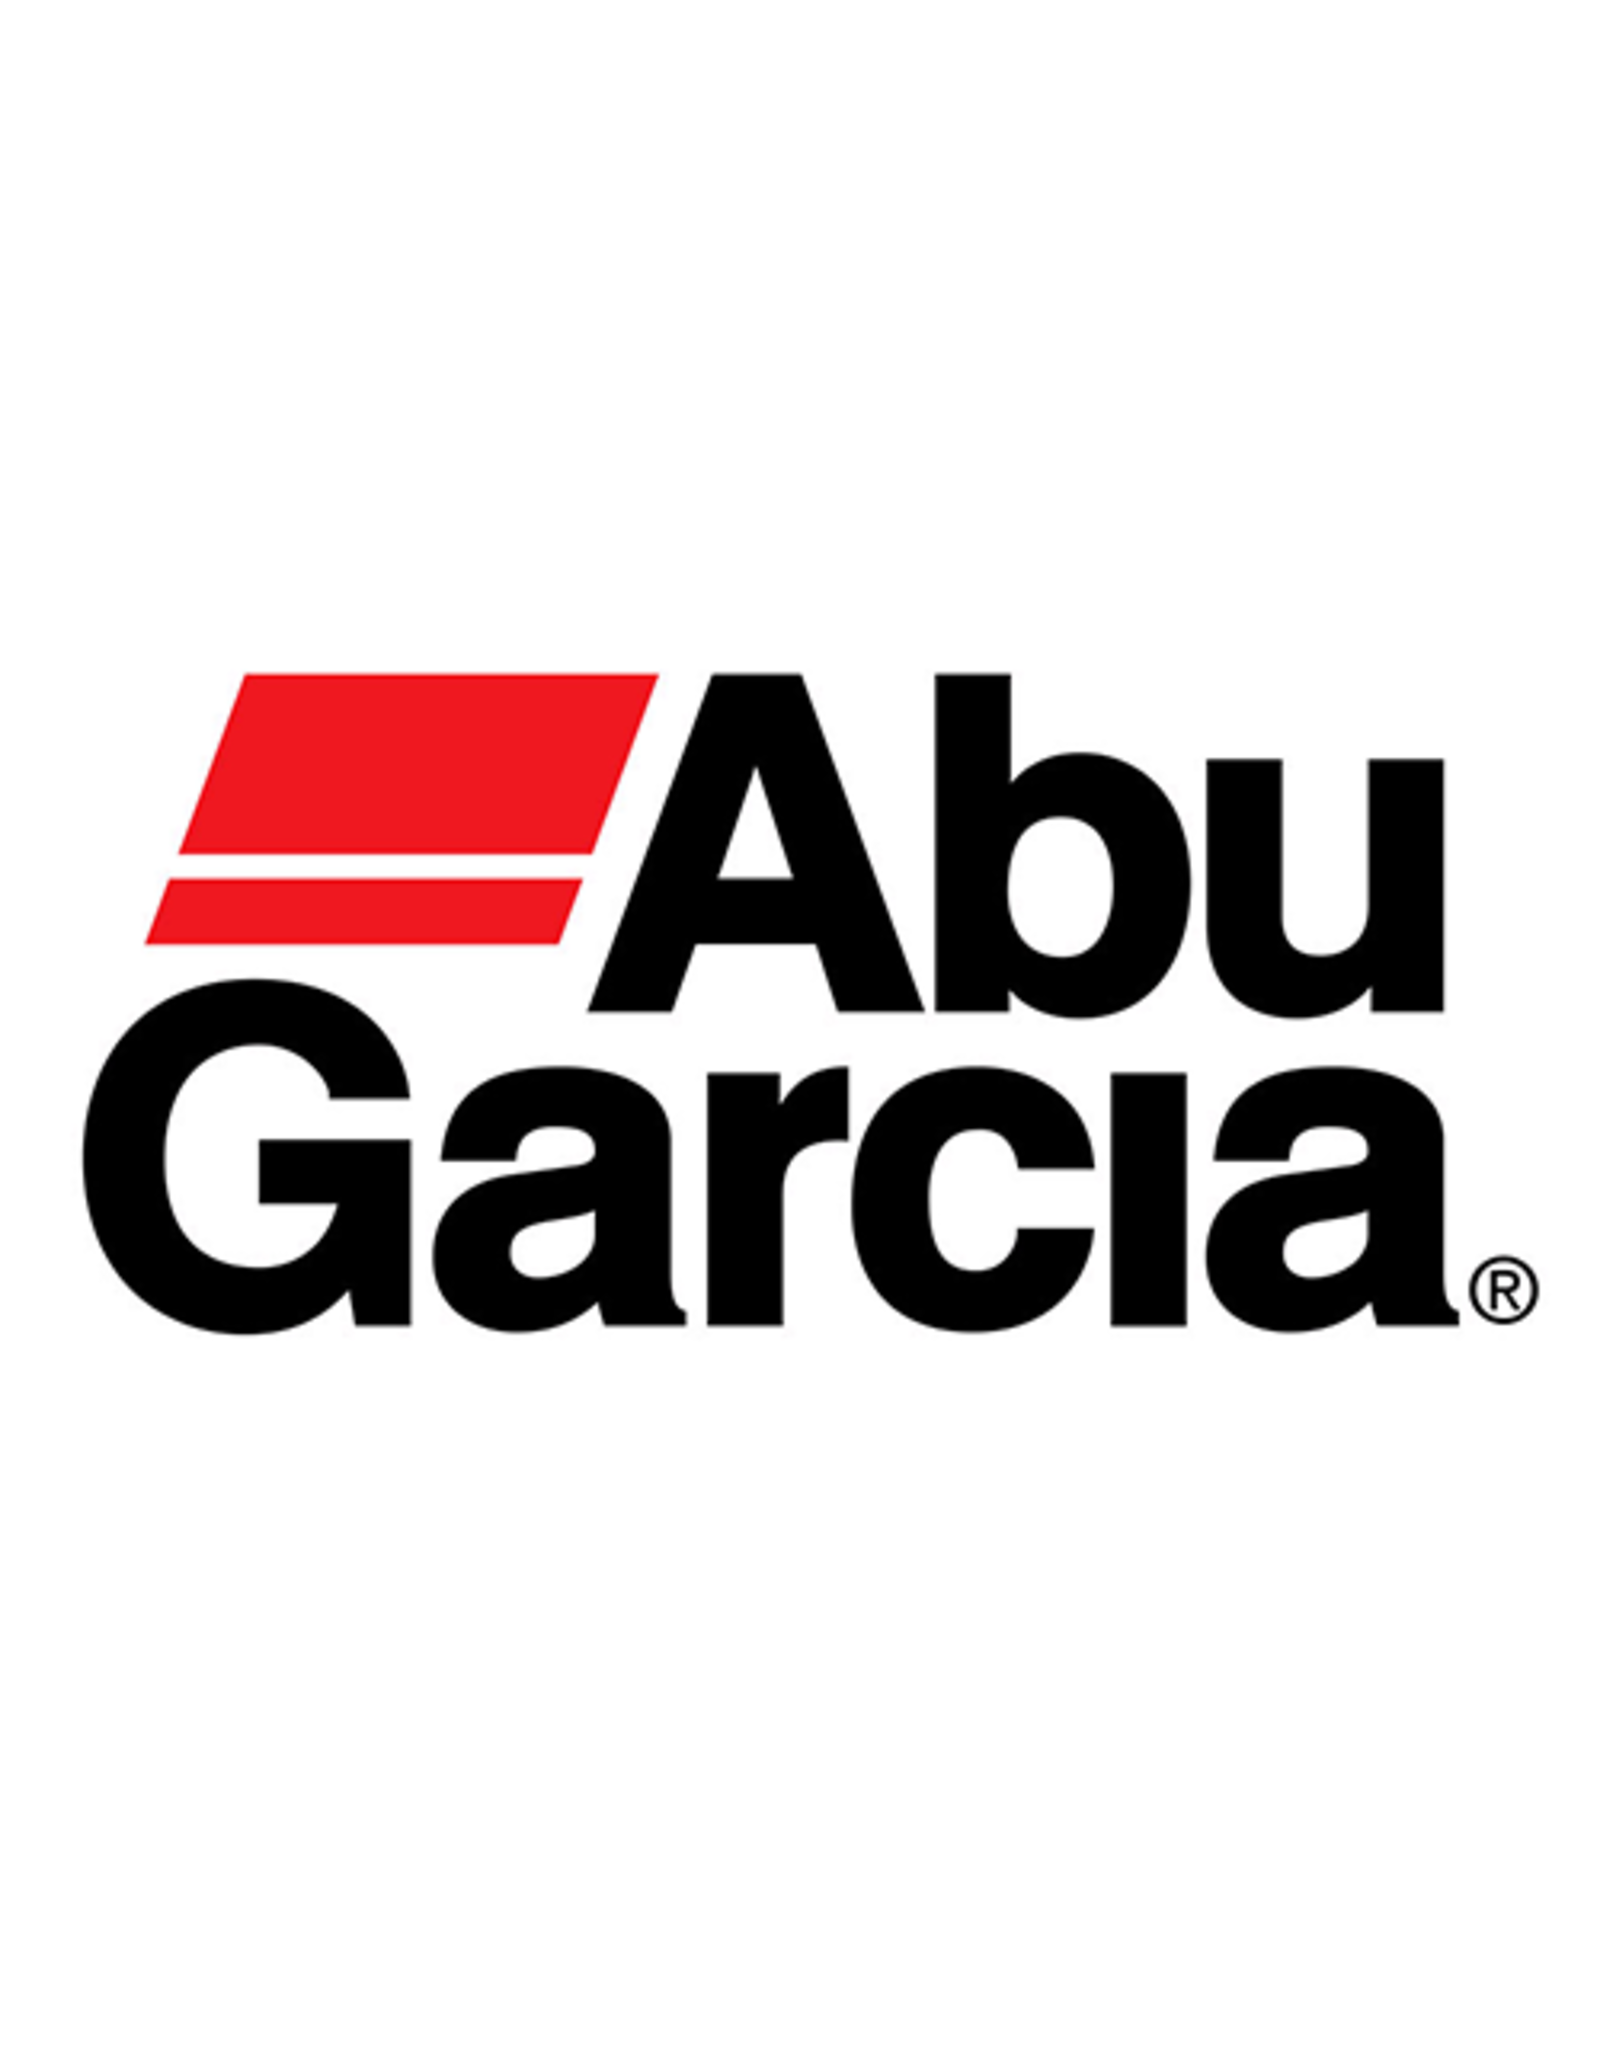 Abu Garcia 10226  PINION GEAR BUSHING